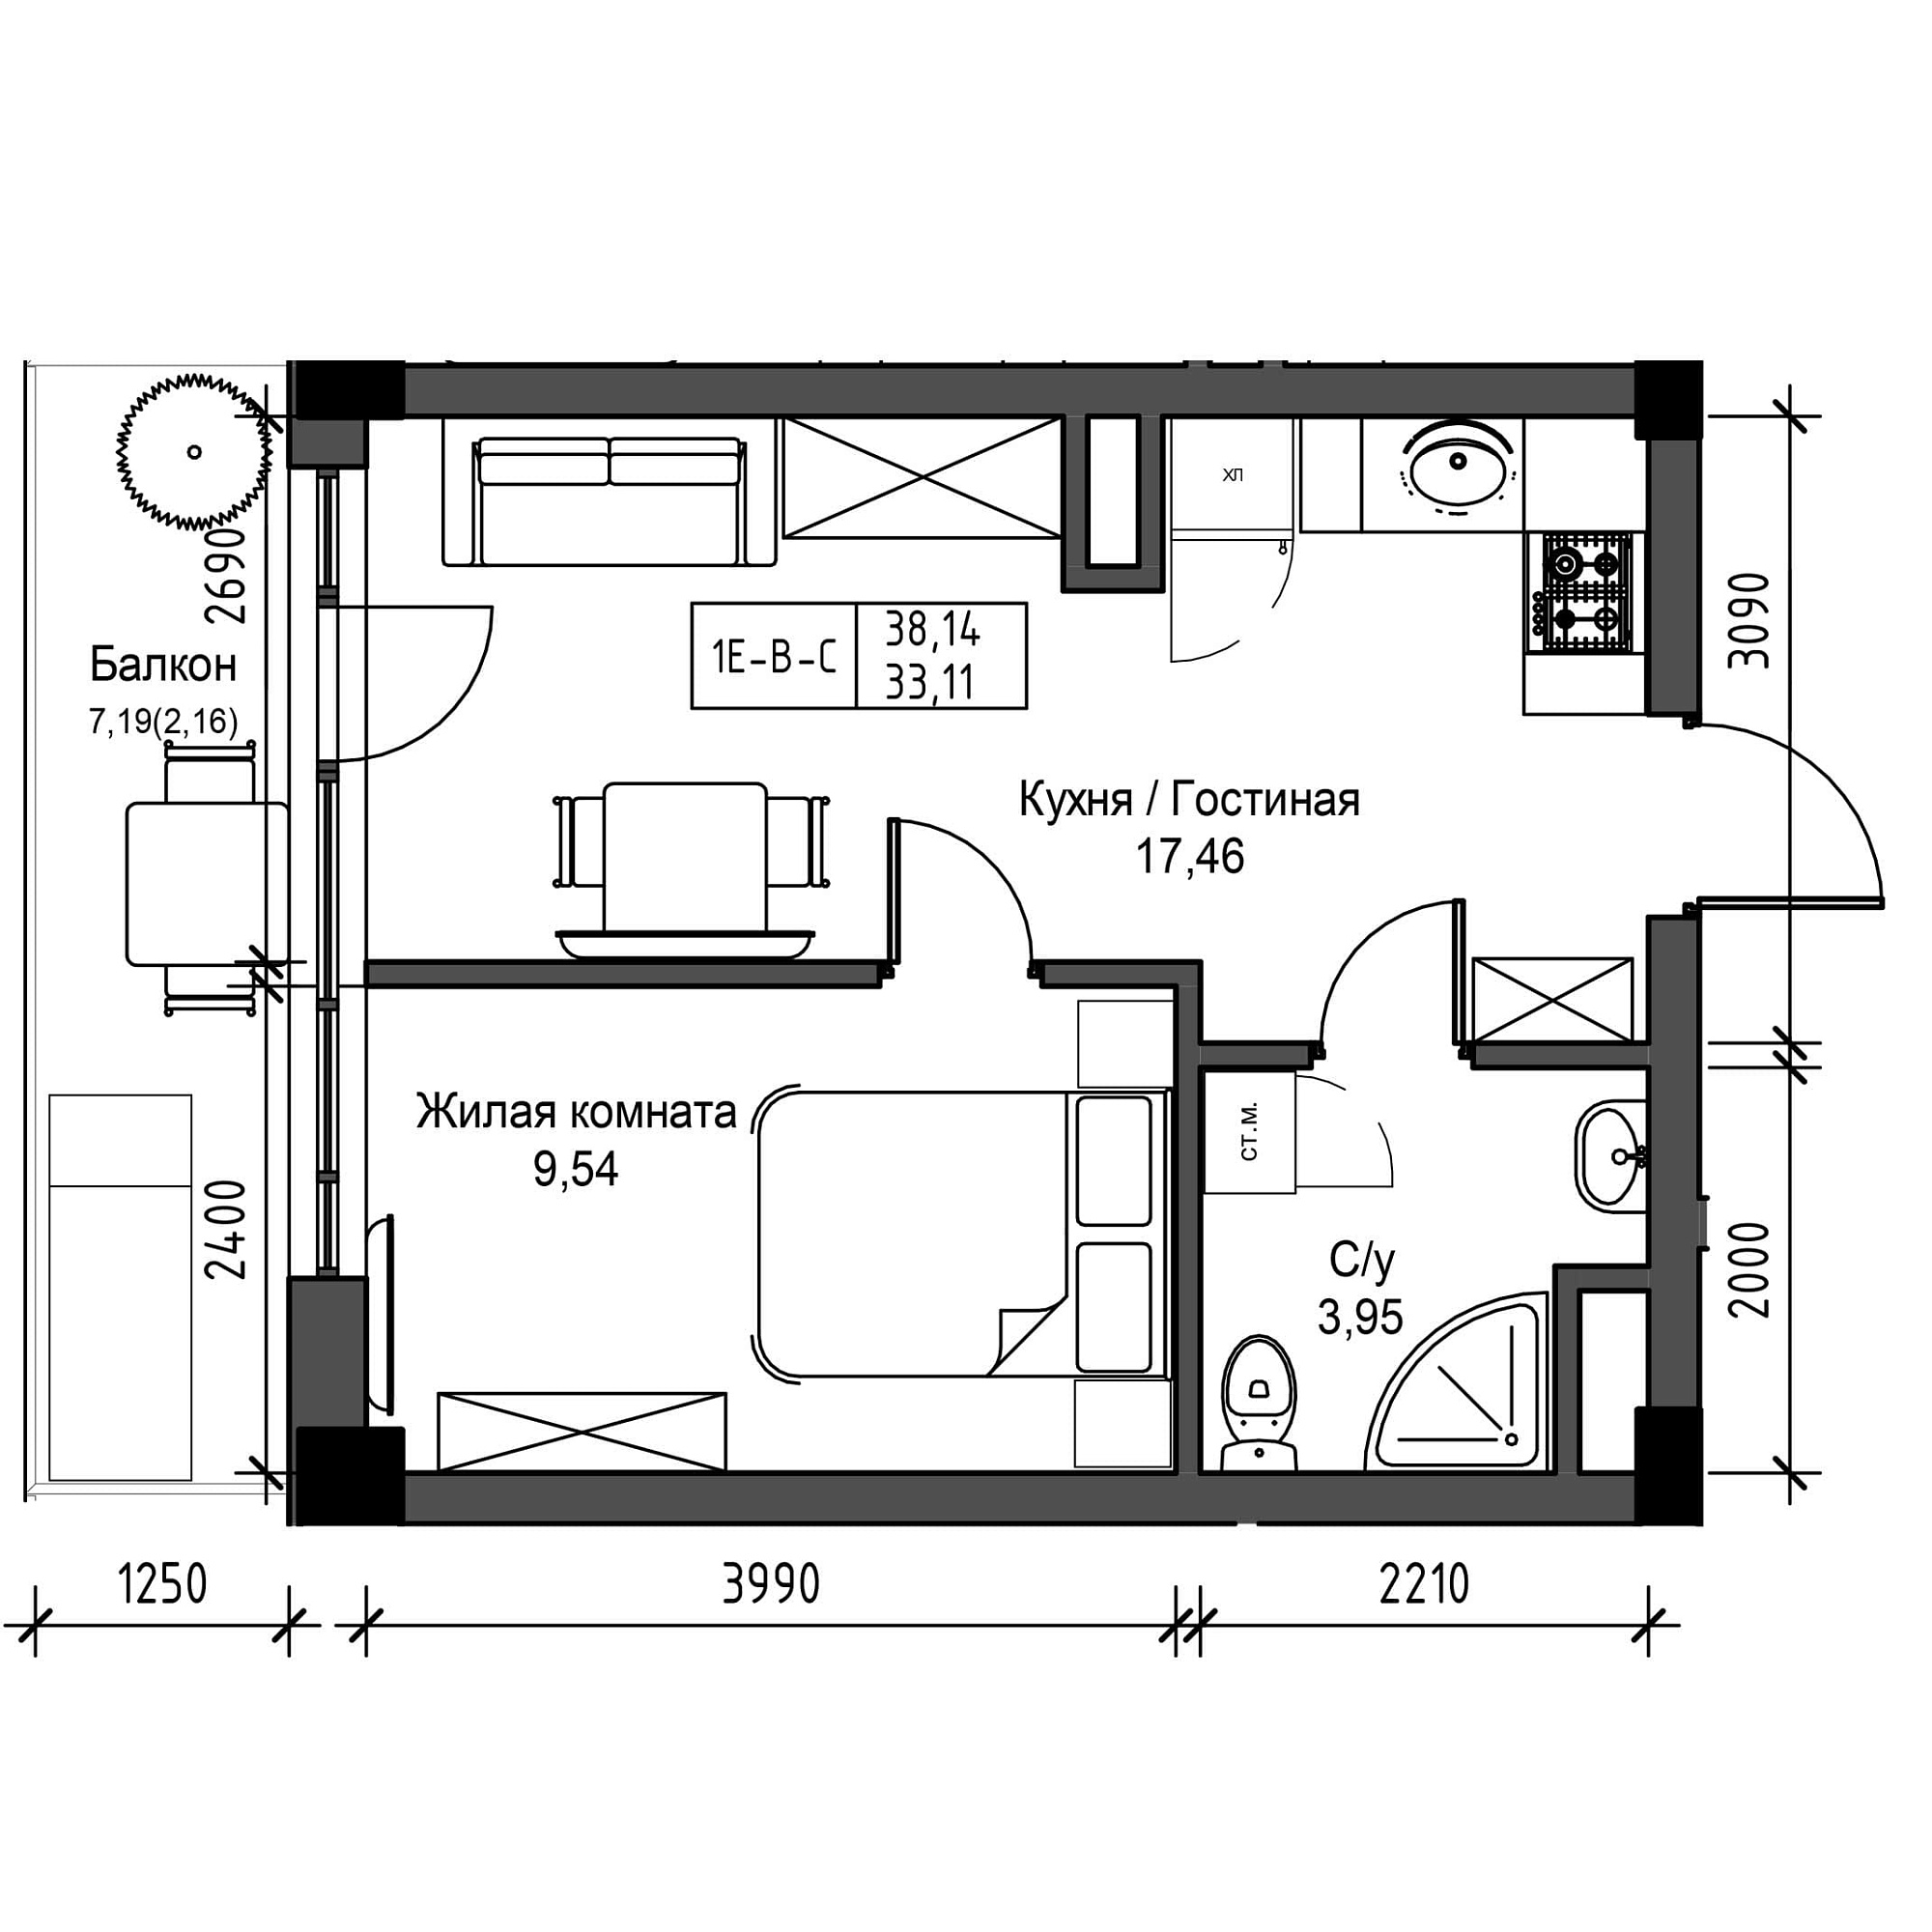 Планування 1-к квартира площею 33.11м2, UM-001-06/0010.